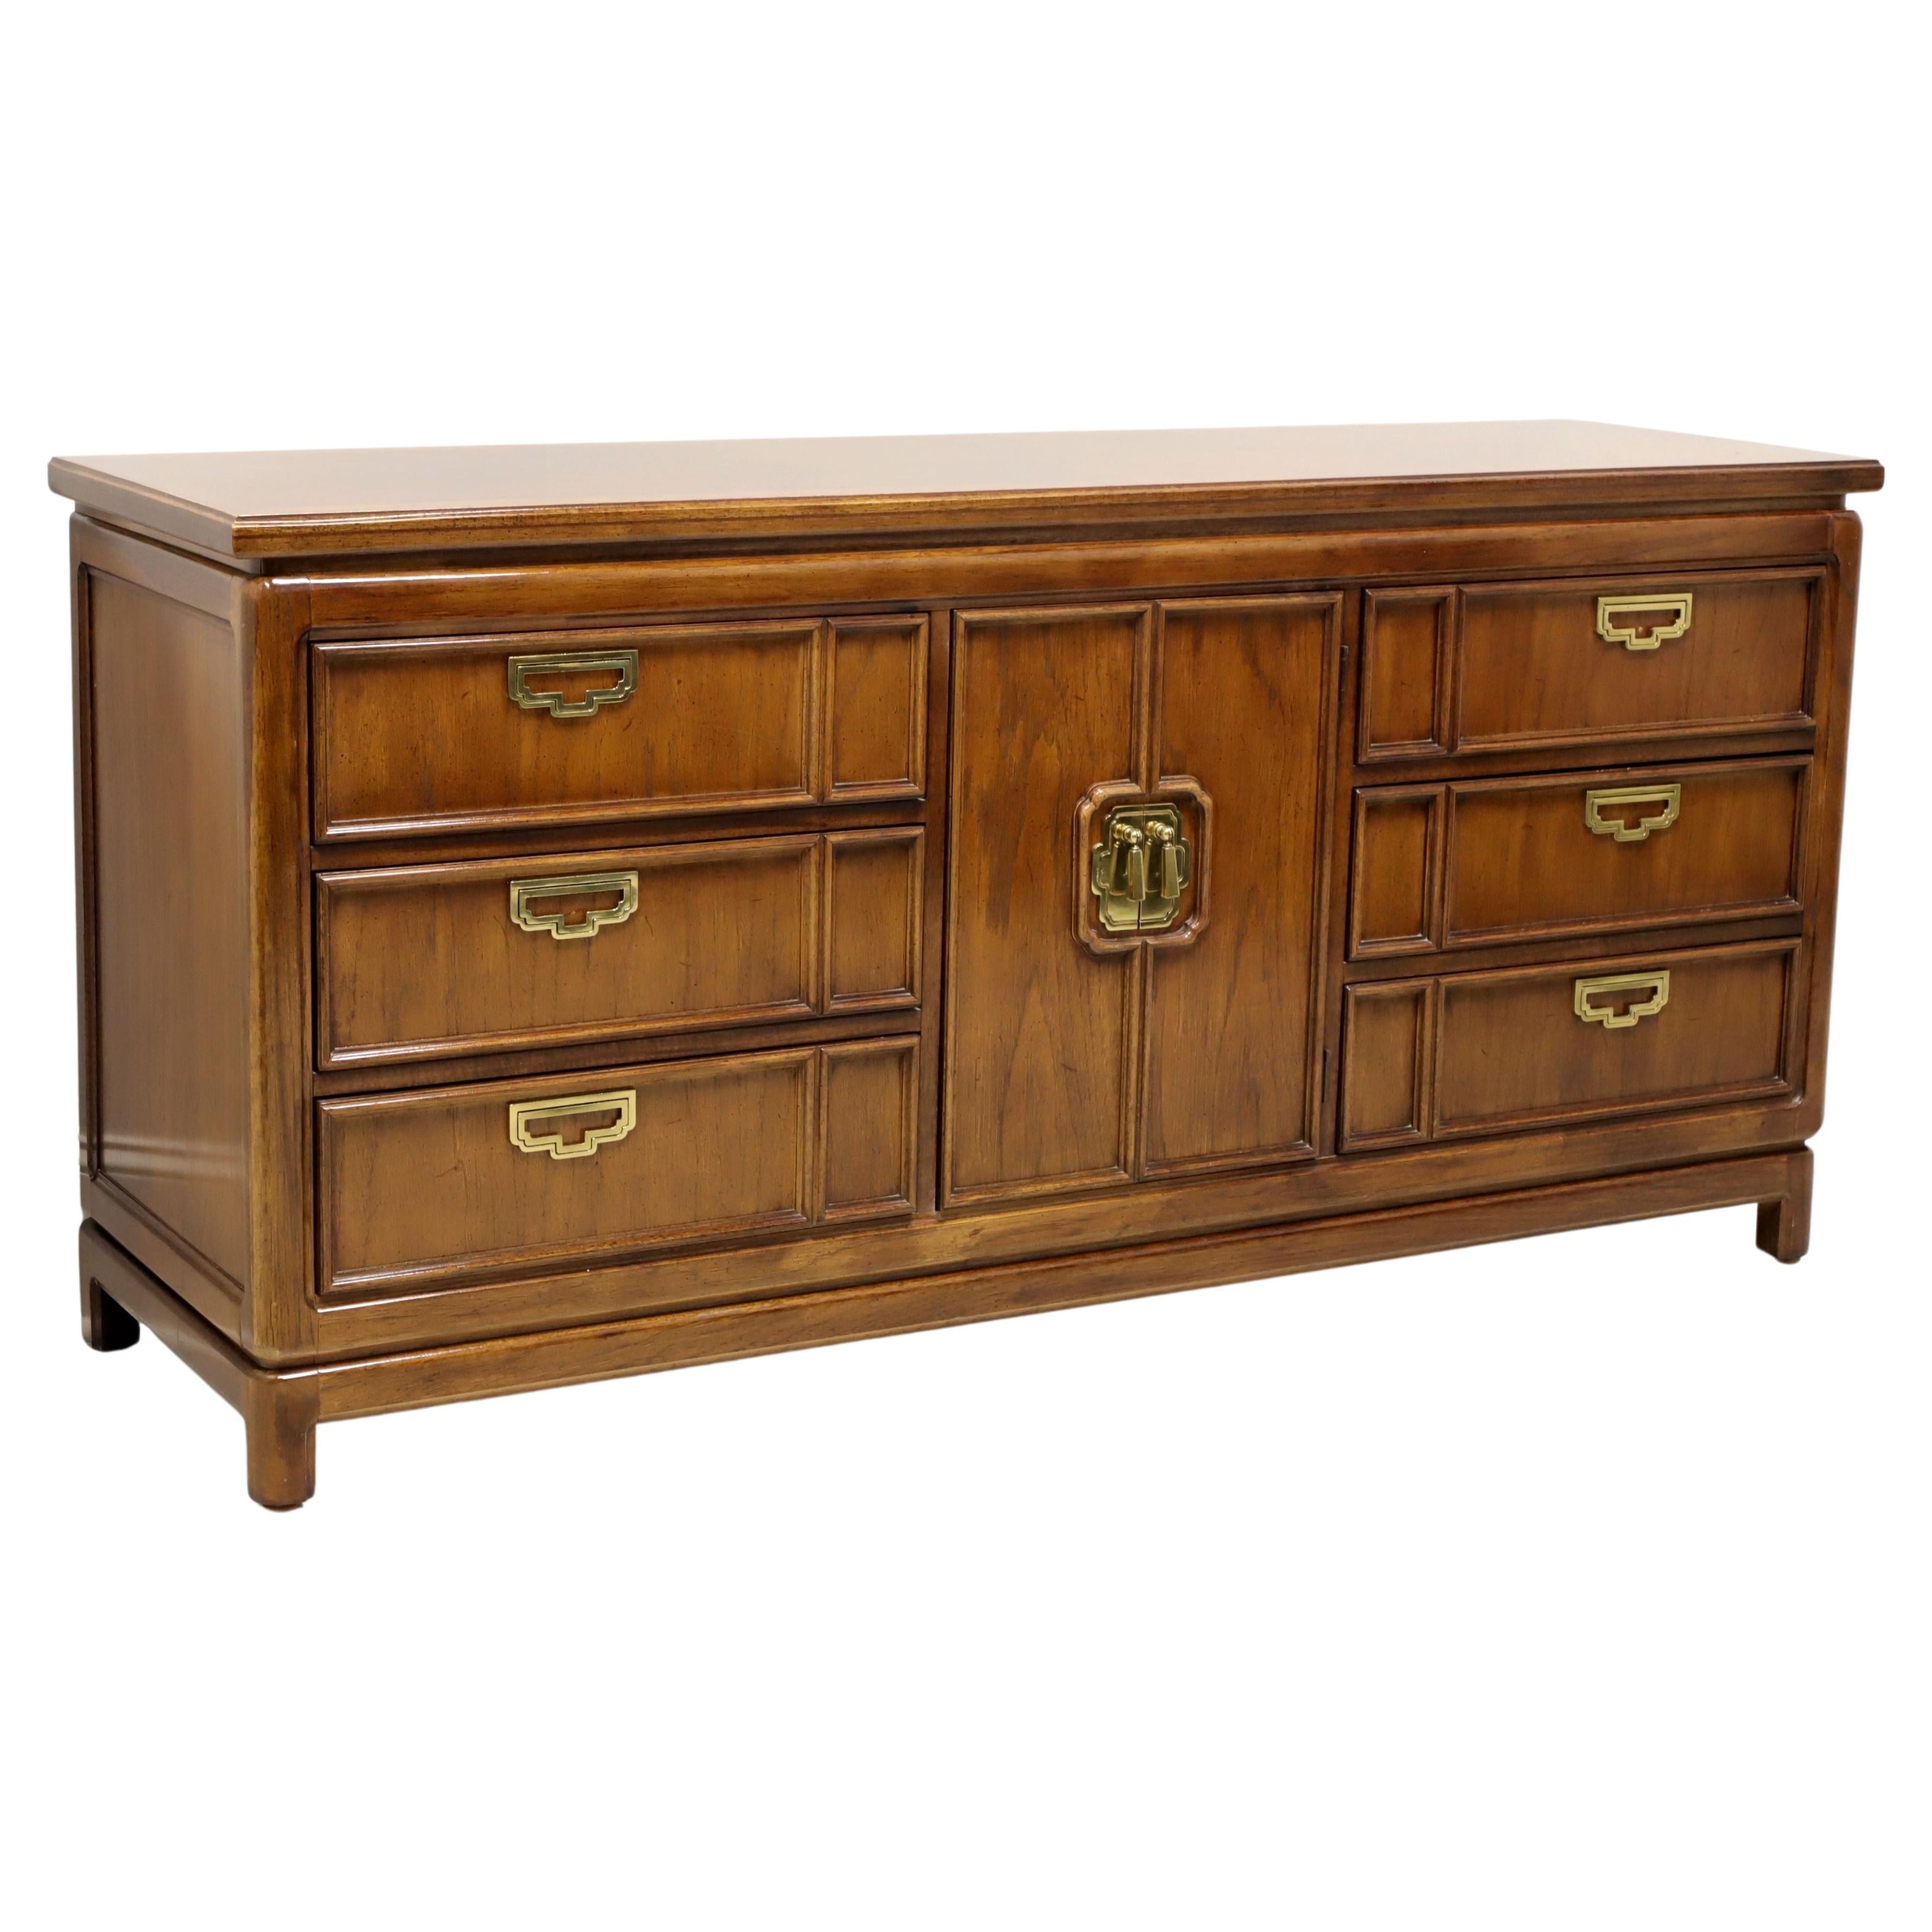 THOMASVILLE Mystique Oak Parquetry Asian Influenced Dresser